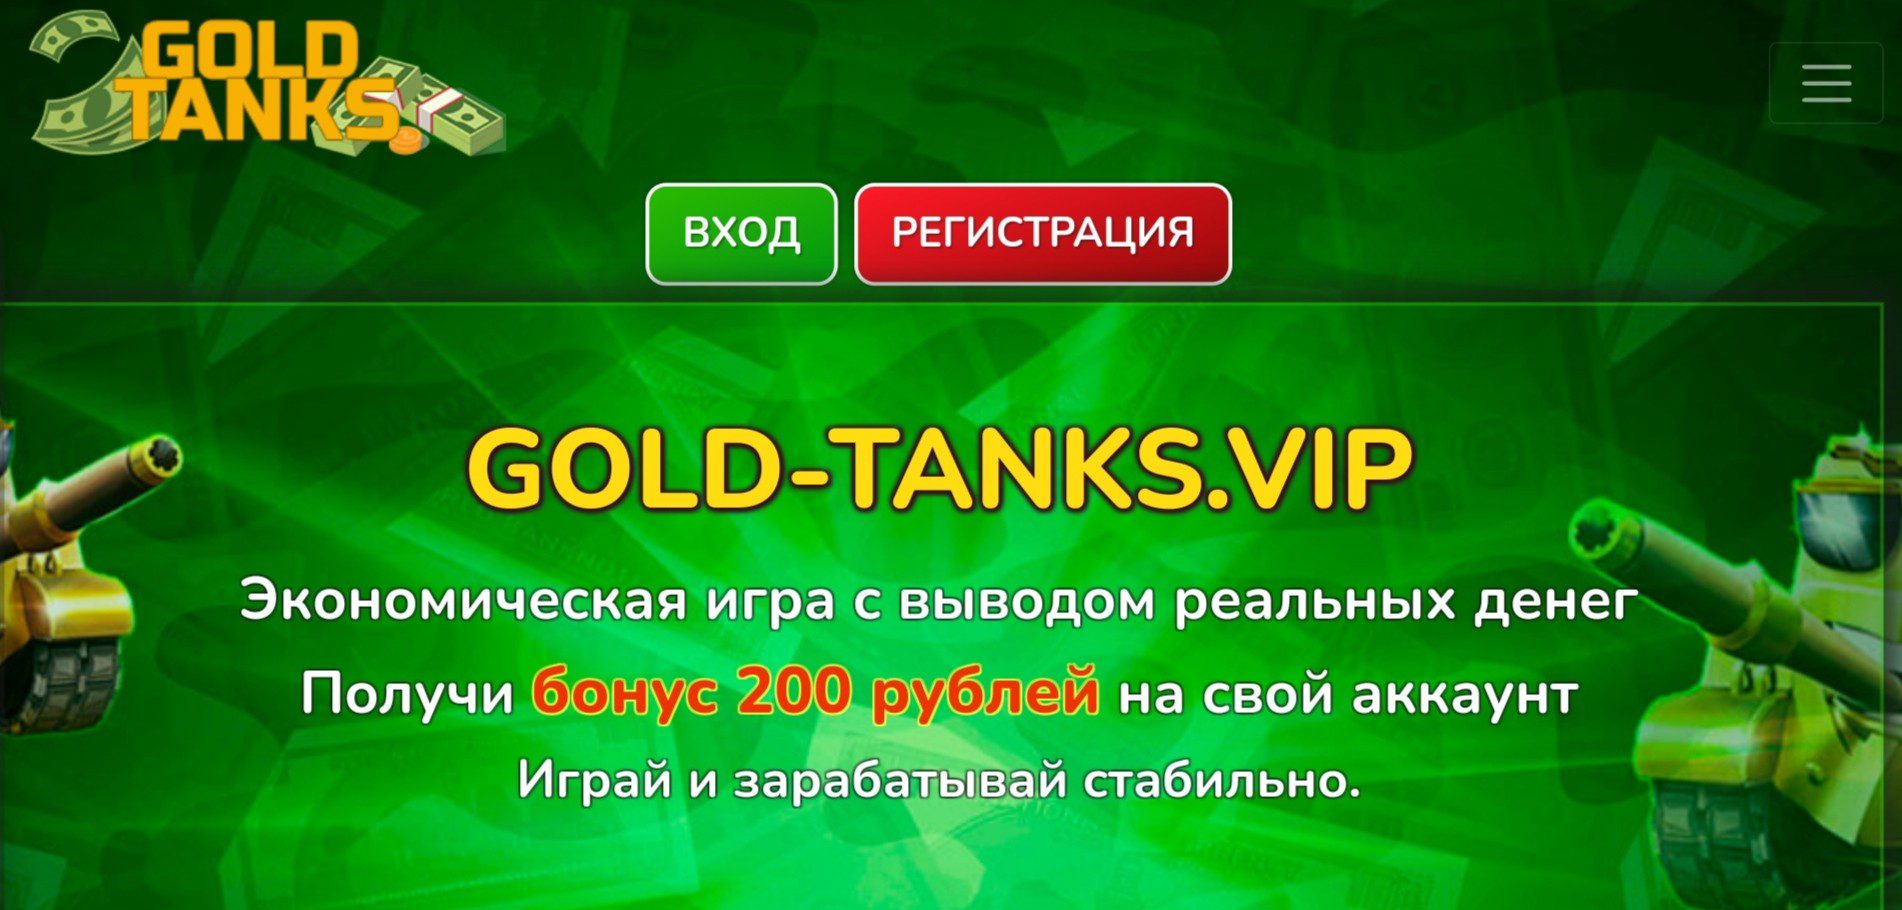 Gold tanks vip сайт обзор